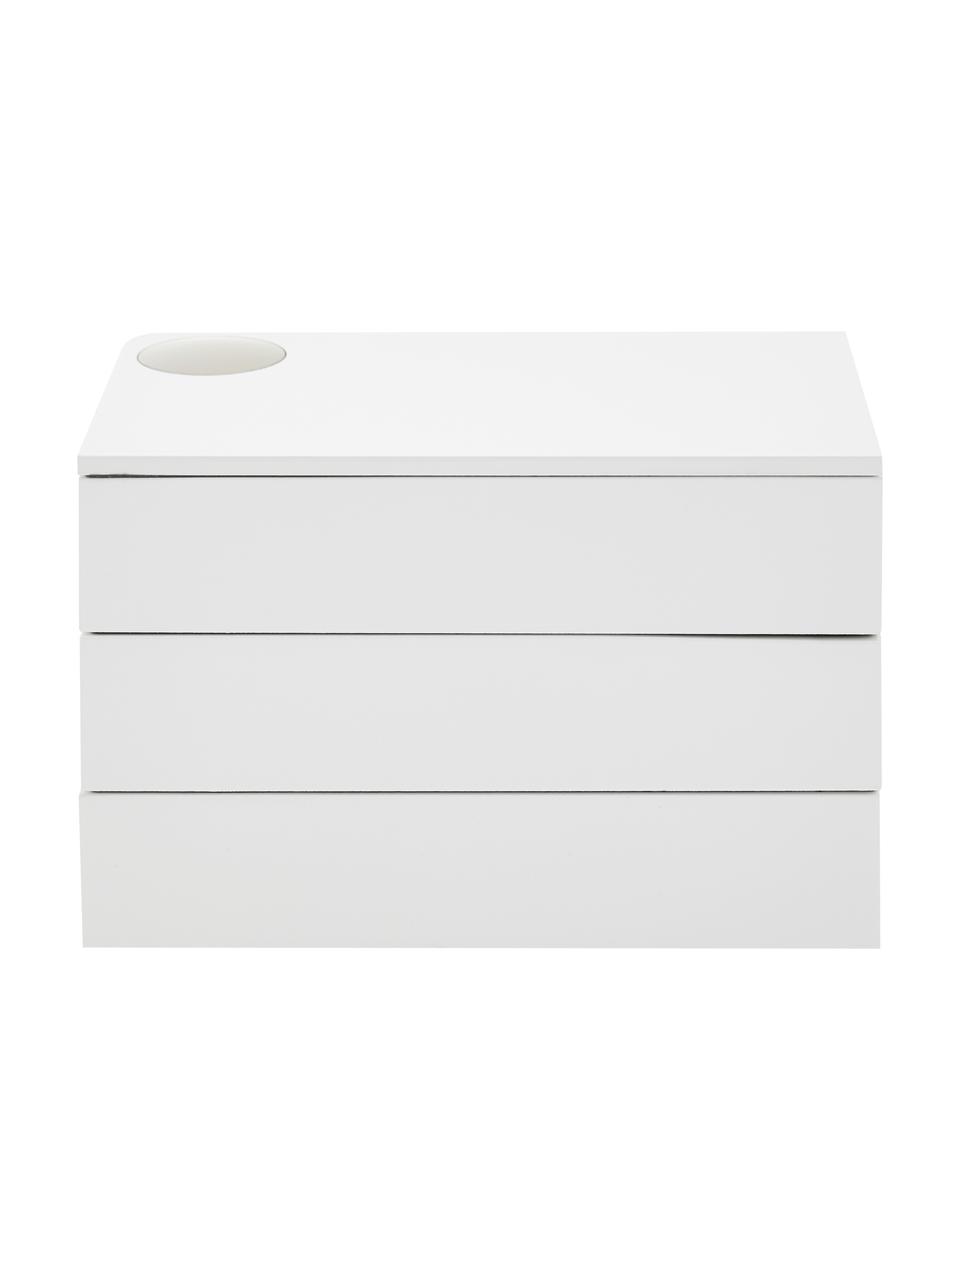 Schmuckbox Spindle, Buchenholz, lackiert, Weiß, B 19 x H 13 cm